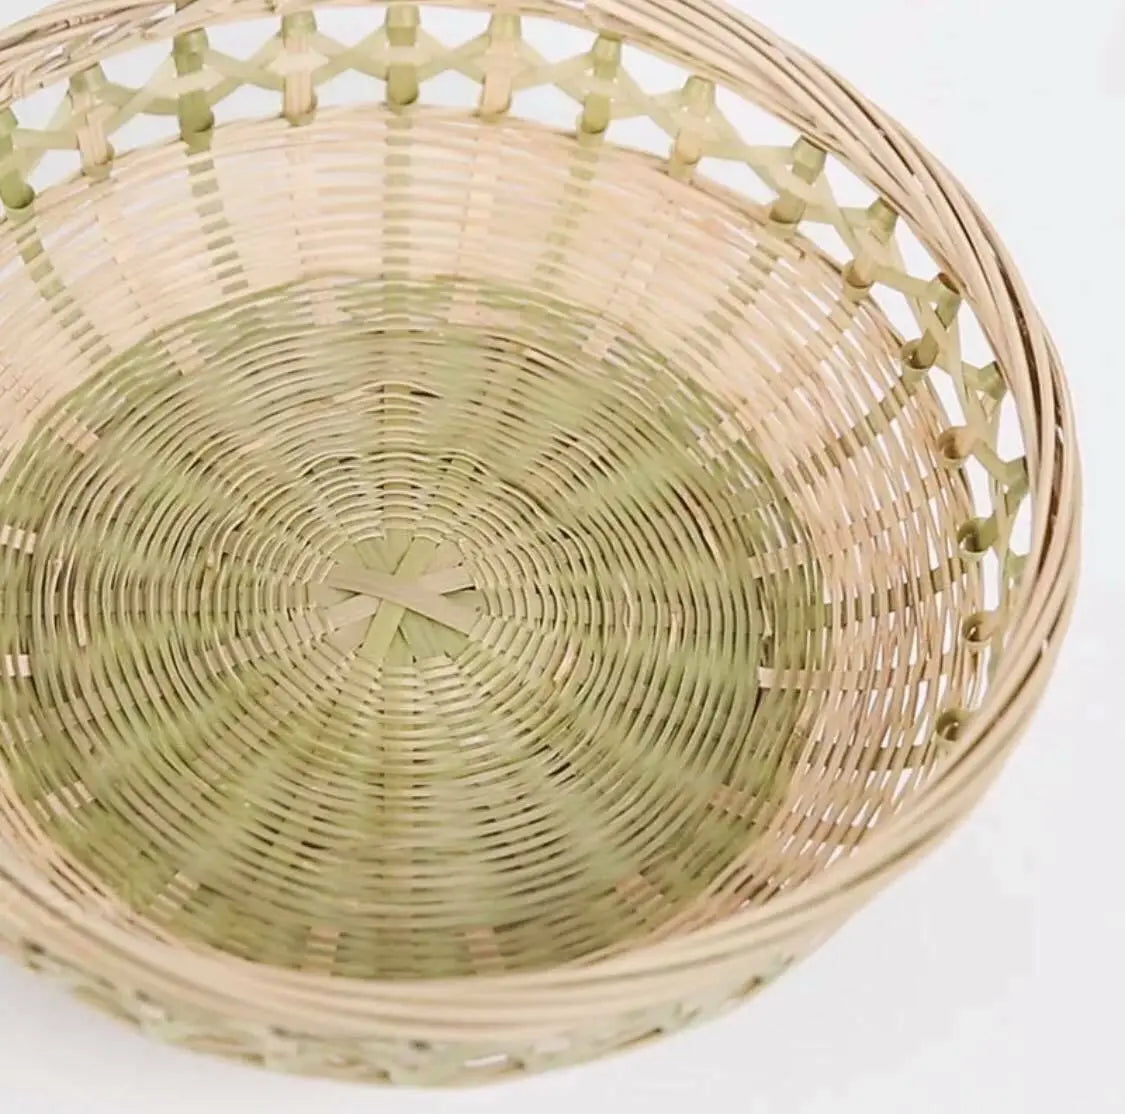 2 x Bamboo Basket Handwoven Handmade Fruit Vegetable Basket Artwork everythingbamboo